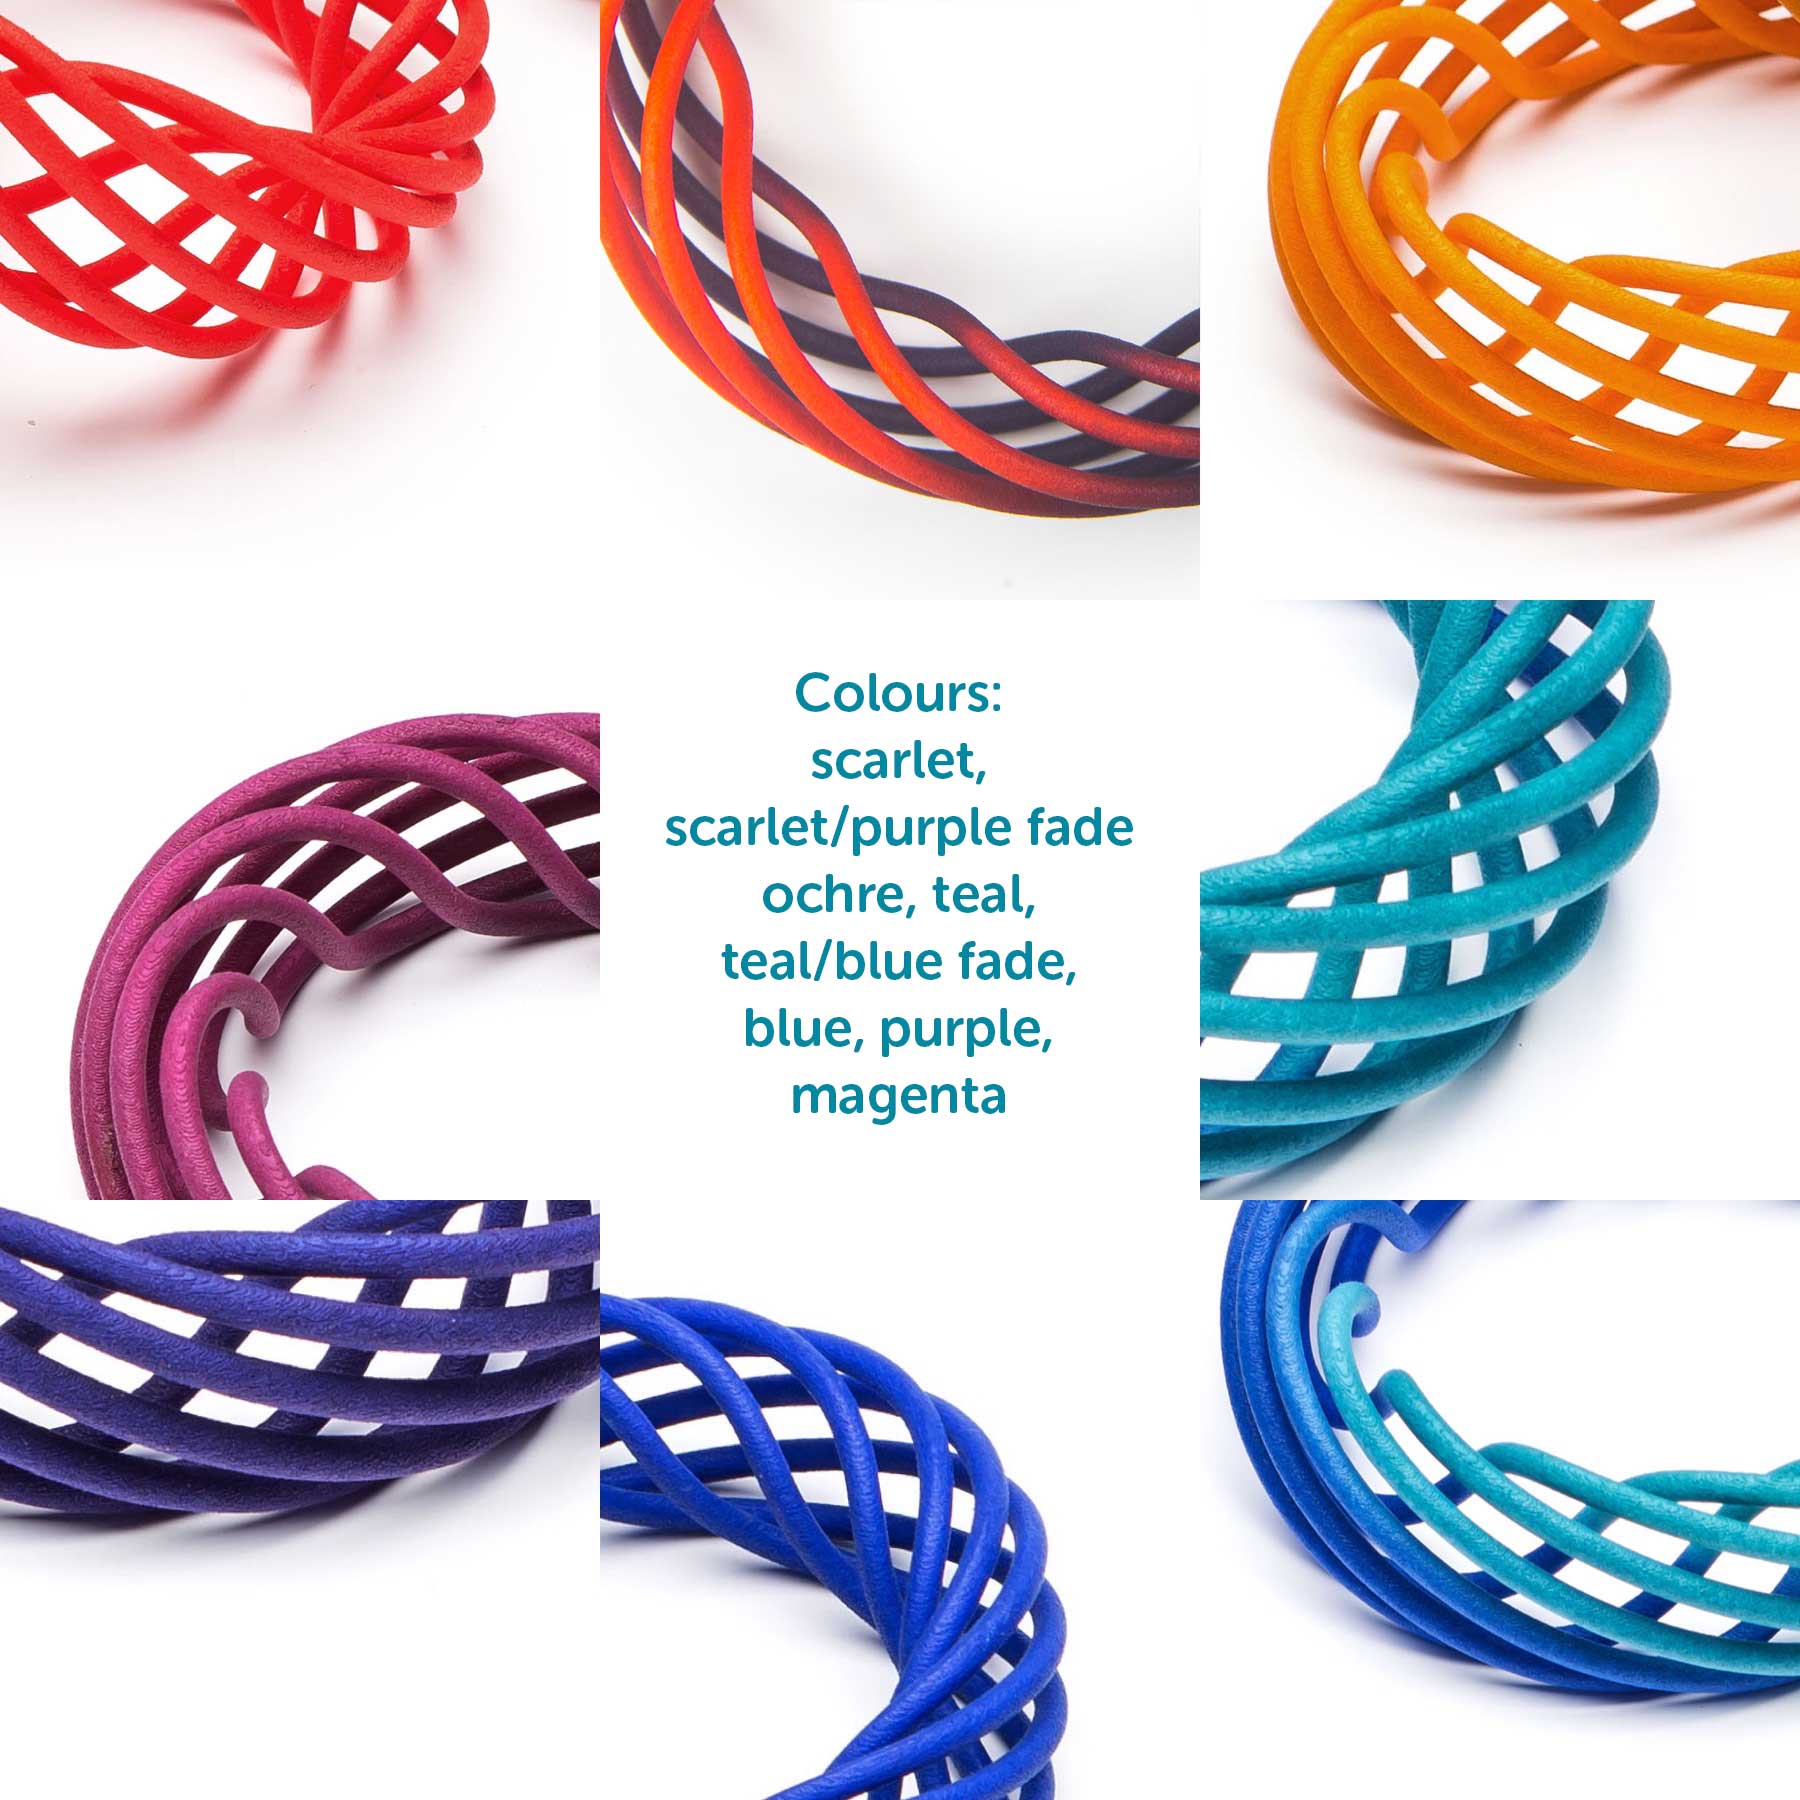 Orbit 3D printed nylon jewellery colour range – scarlet, scarlet / purple fade, ochre, teal, teal / blue fade, blue, purple, magenta